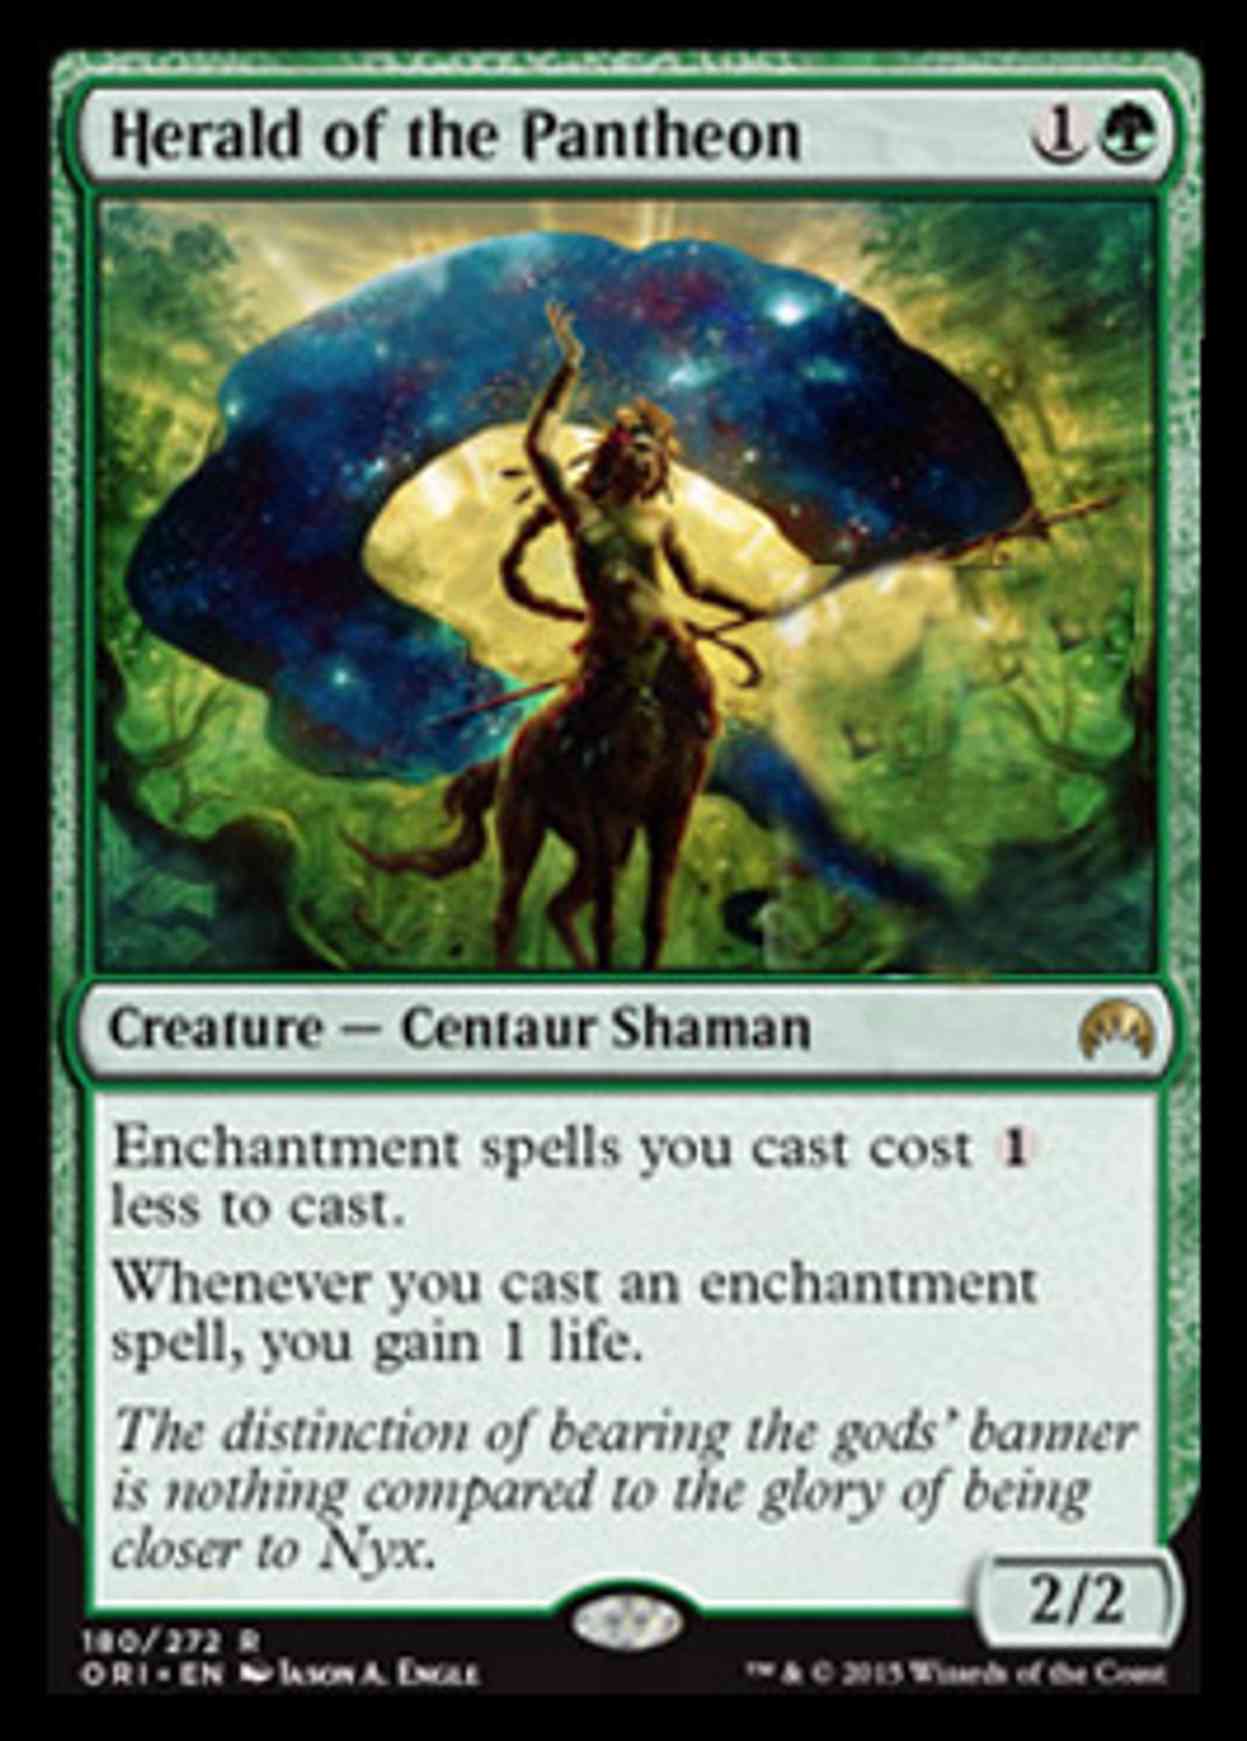 Herald of the Pantheon magic card front